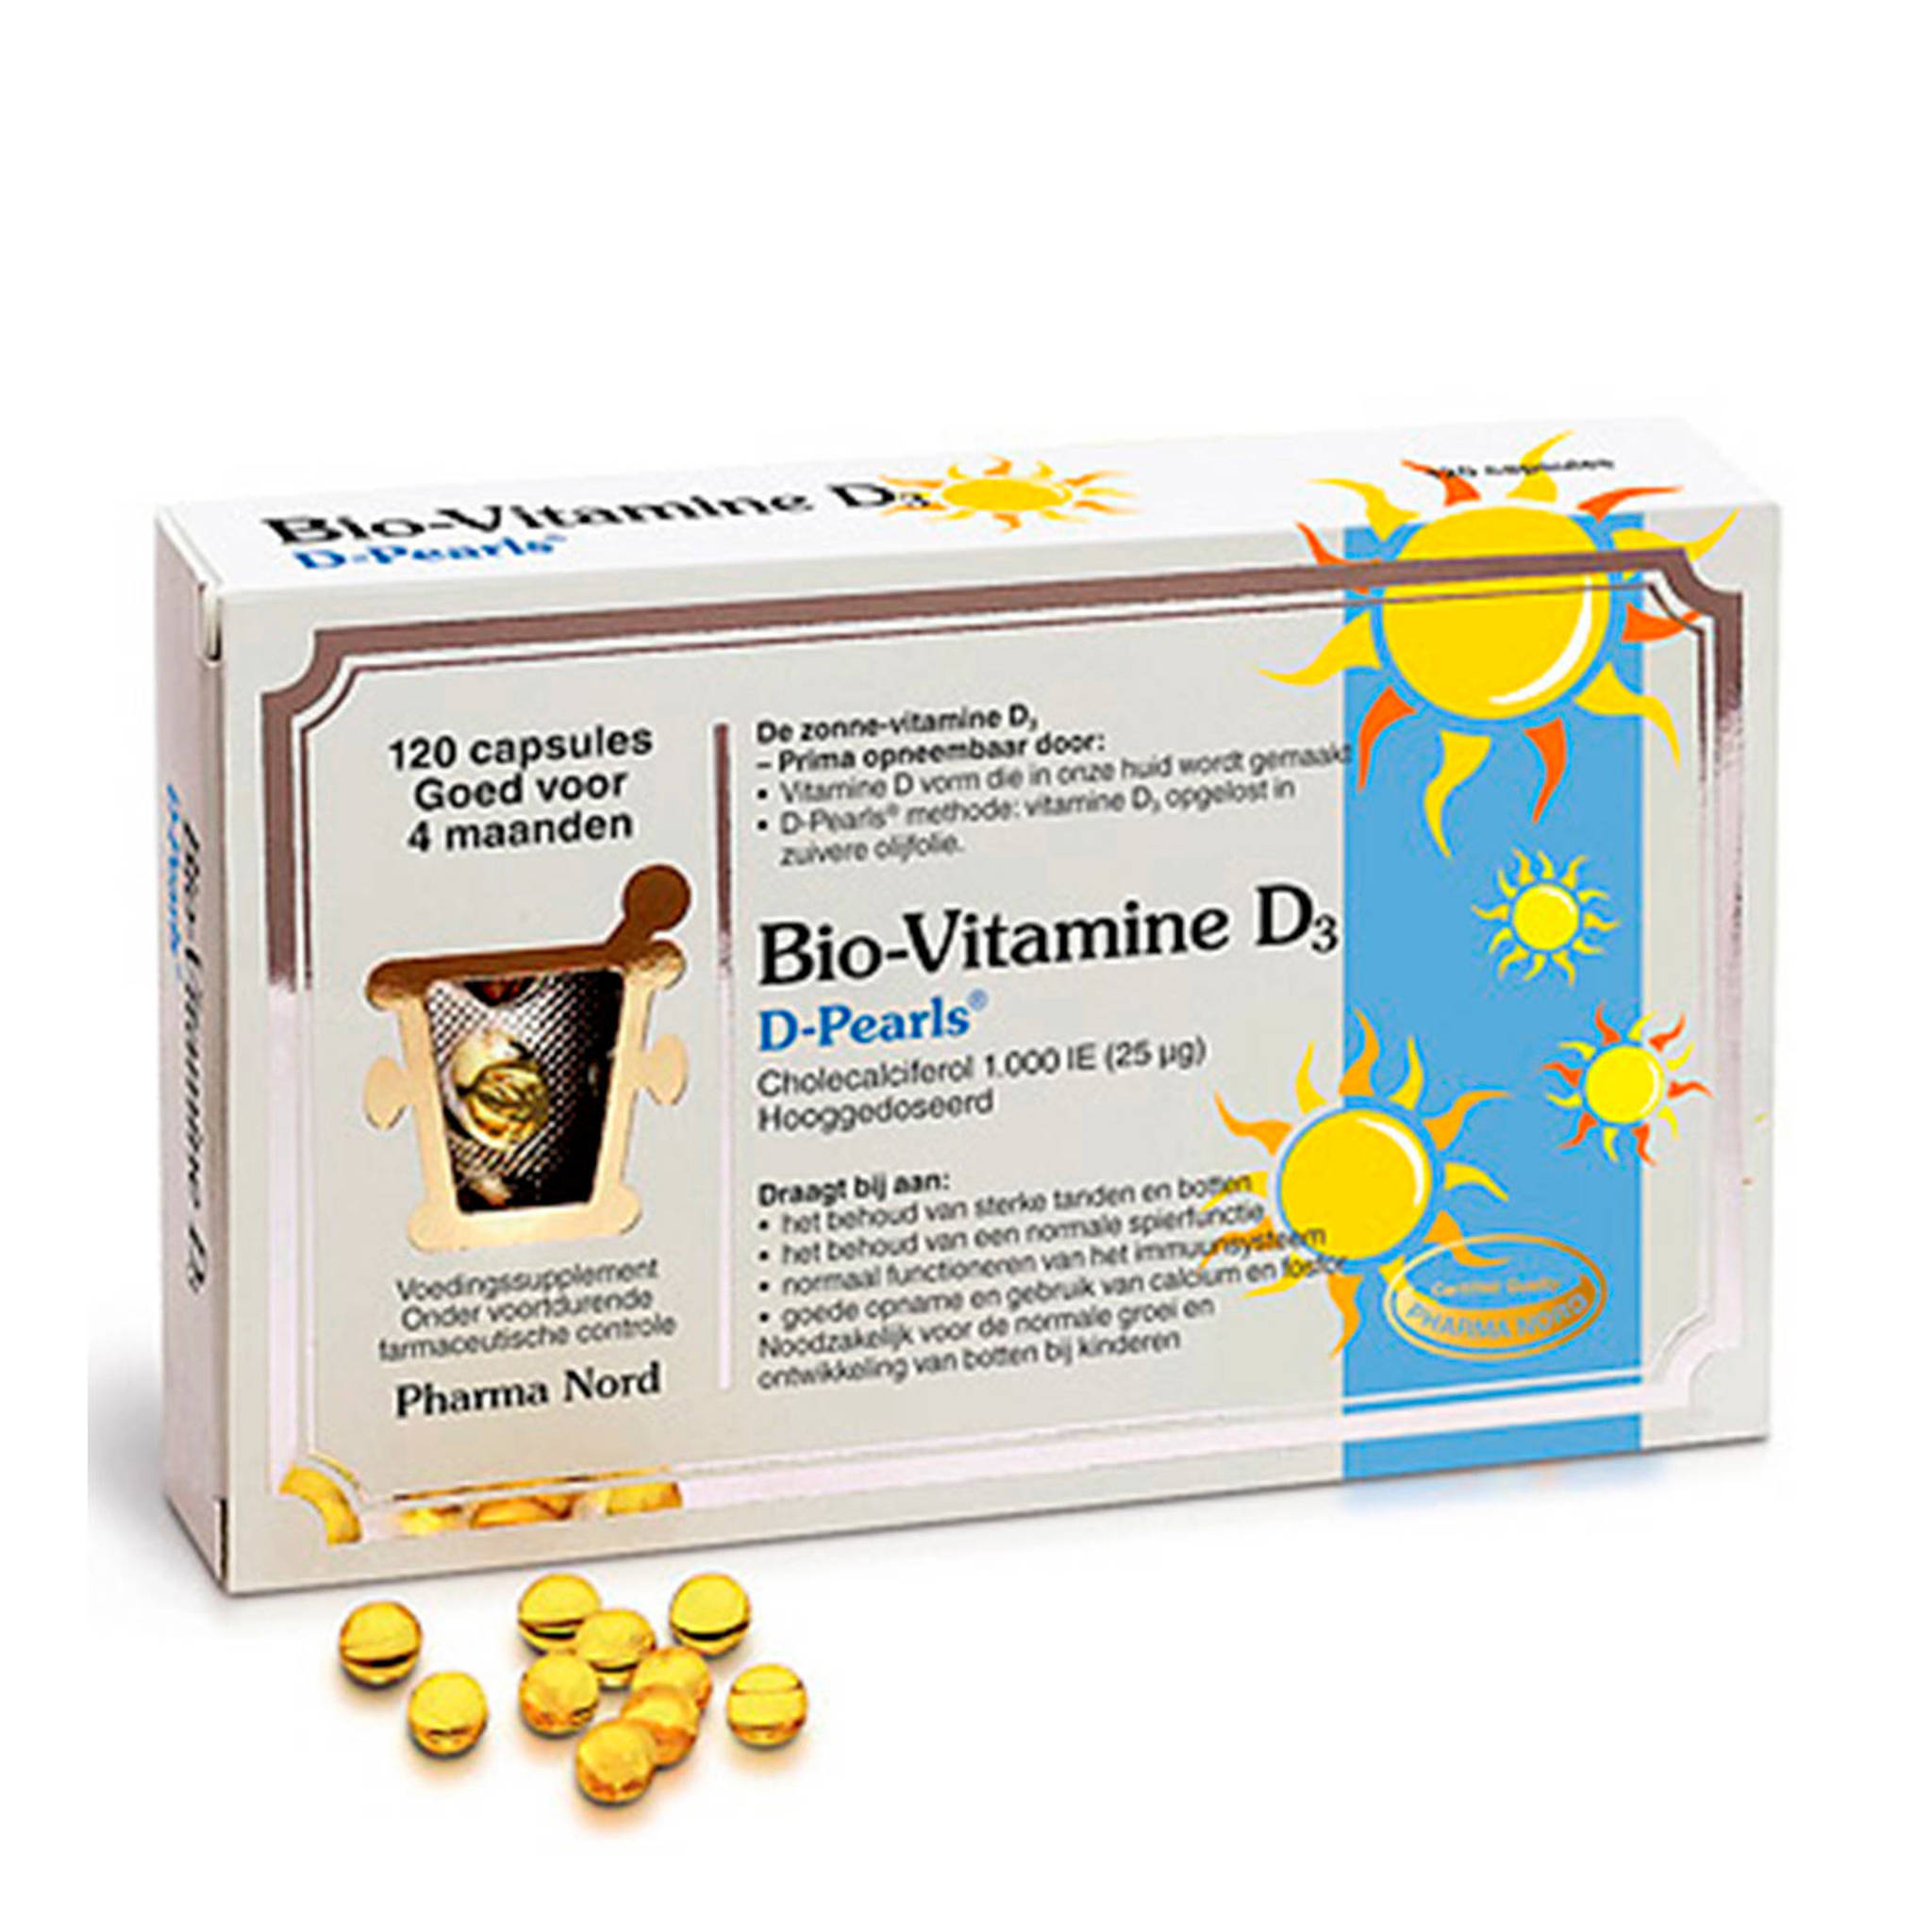 Pharma Nord D3 - D Pearls (1000 IE) - 120 capsules - vitaminen | wehkamp